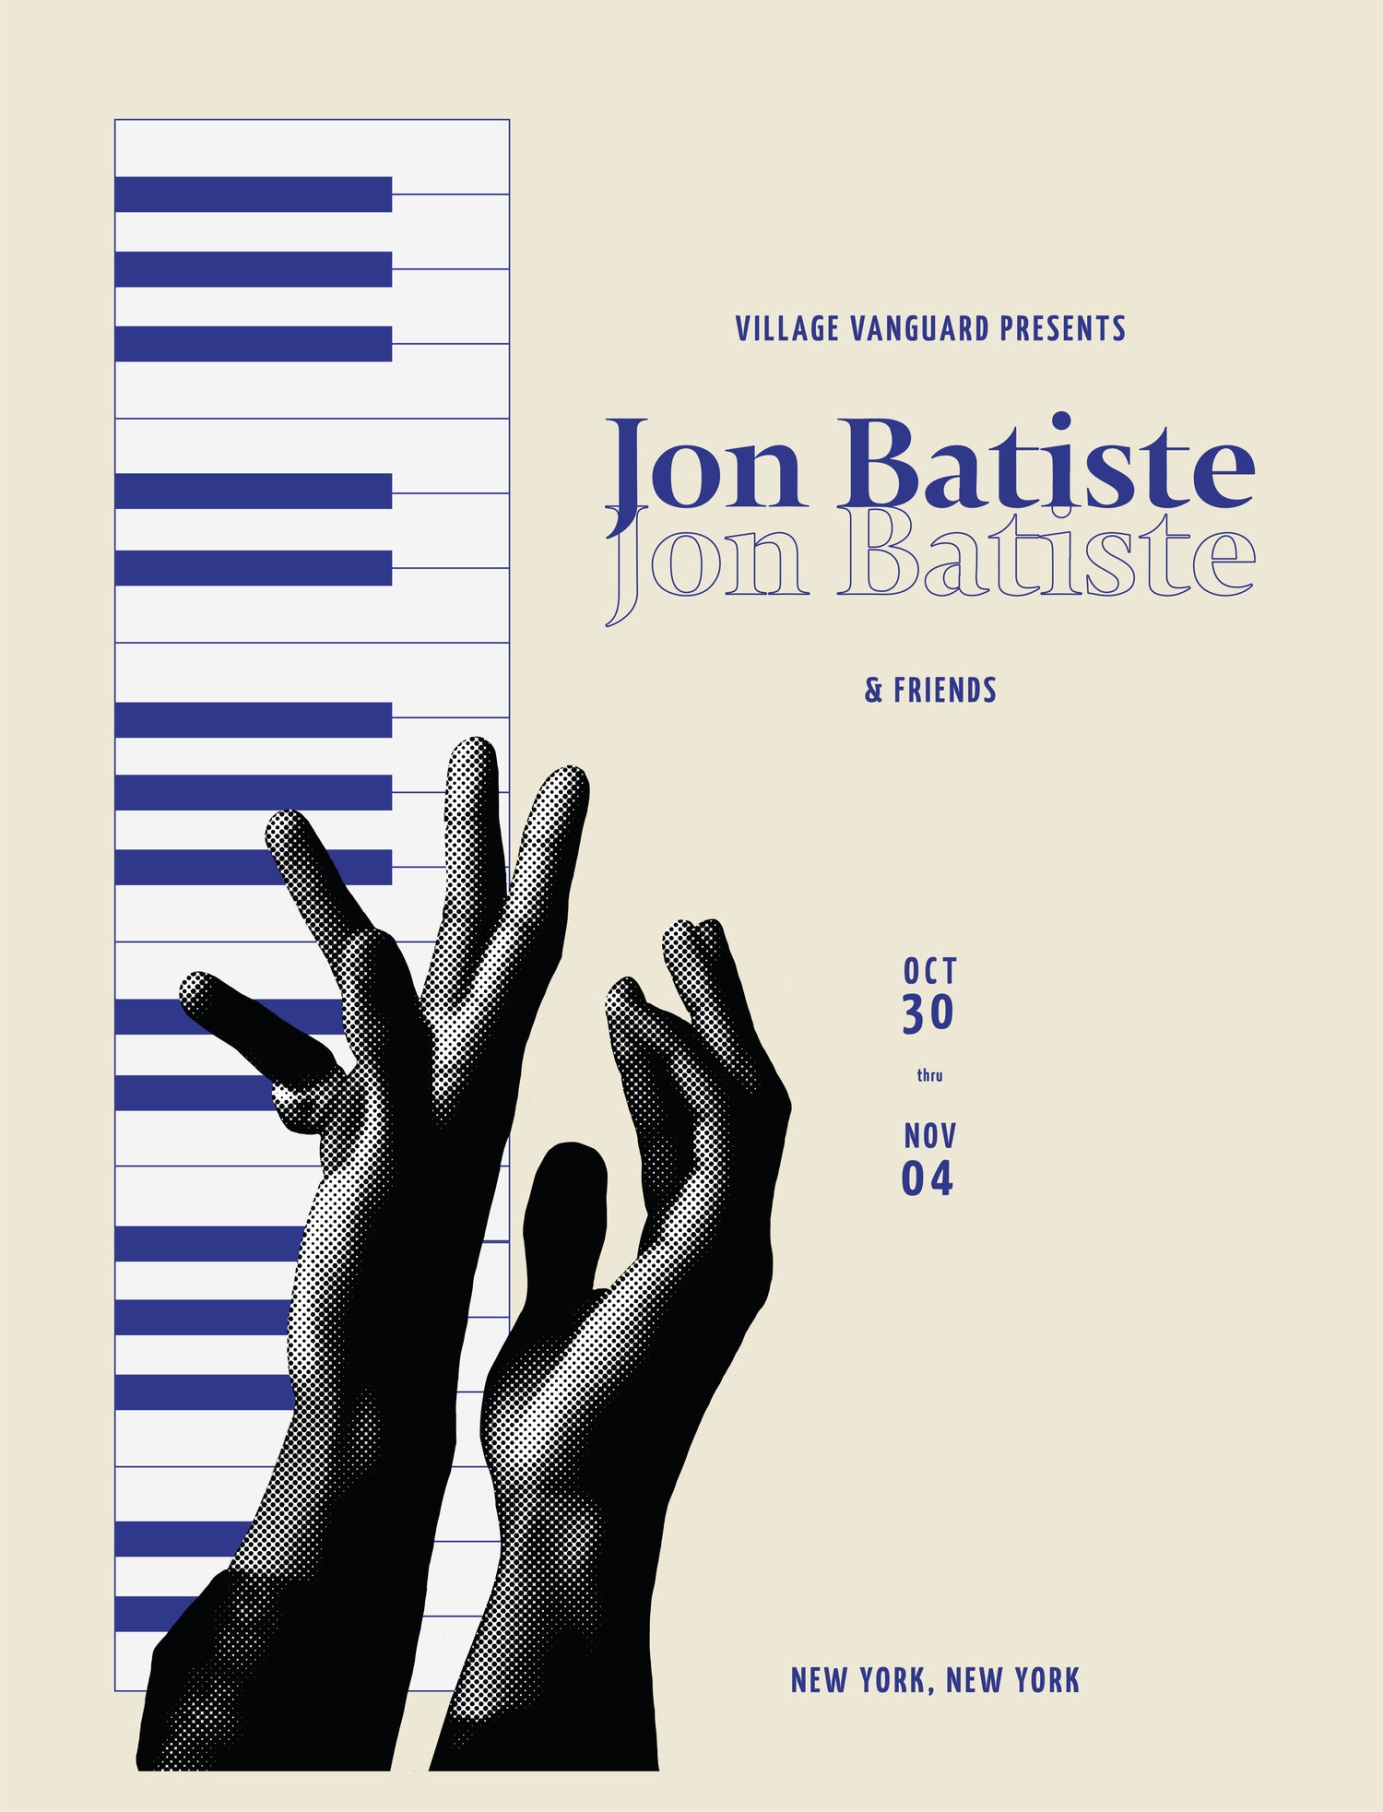 Jon Batiste Poster Designs